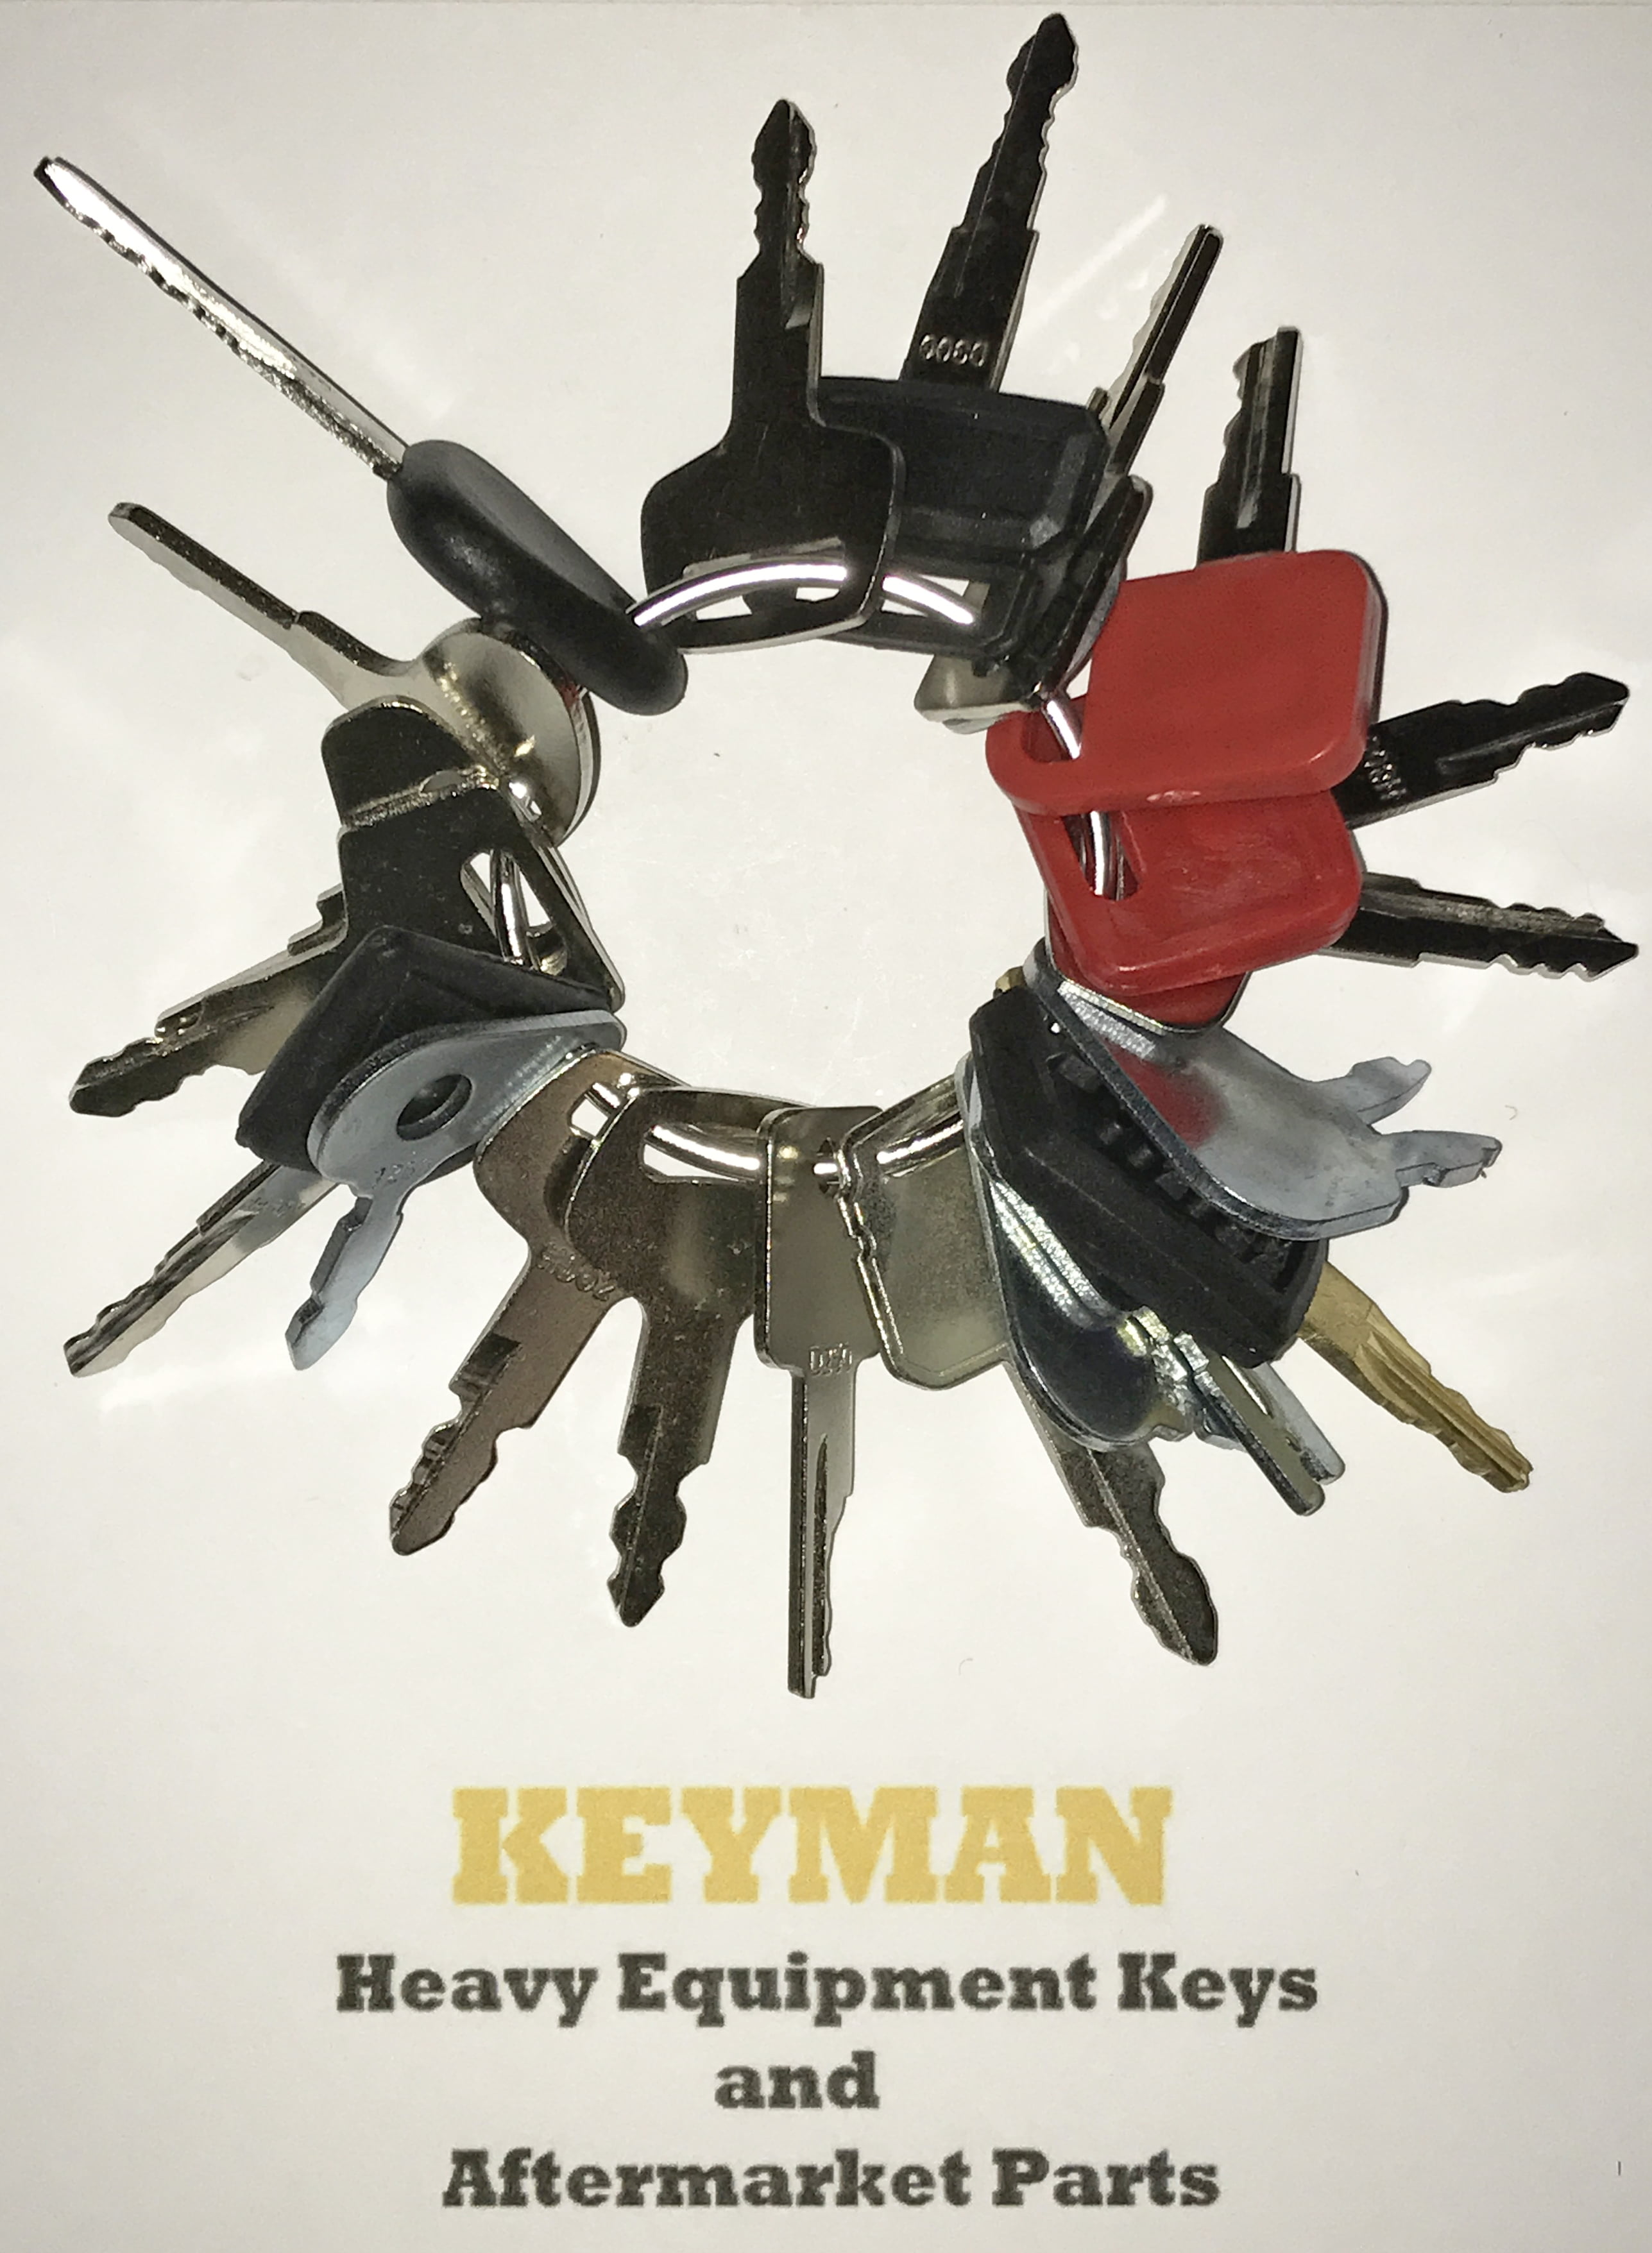 Keyman Kubota Heavy Equipment Key Set 12 Different Keys 12 Keys Set/Construction and Tractor Ignition Key Set 